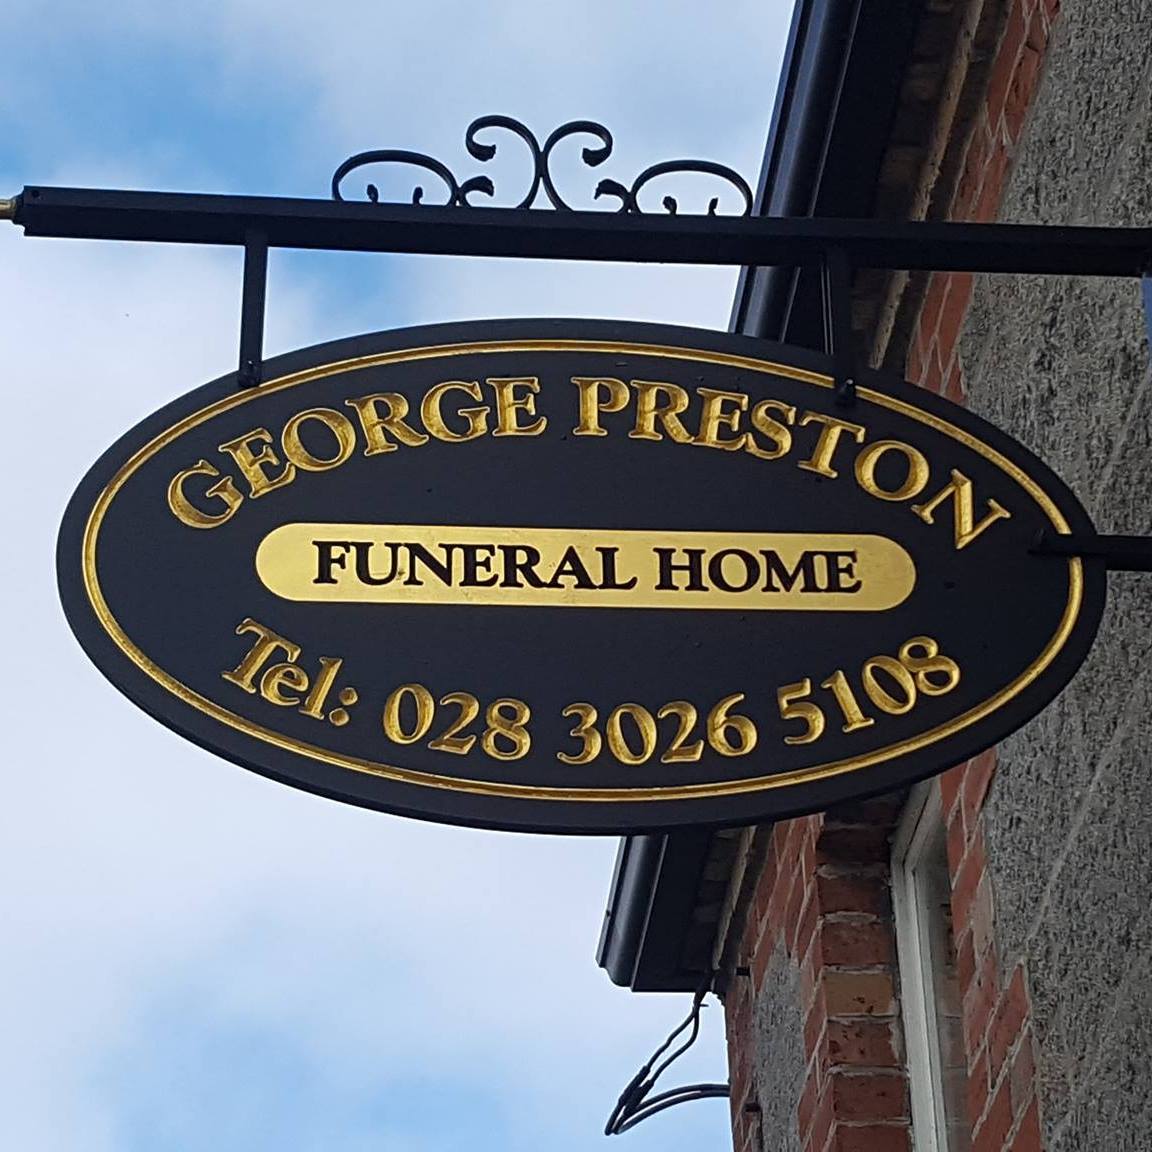 George Preston Funeral Directors & Funeral Home